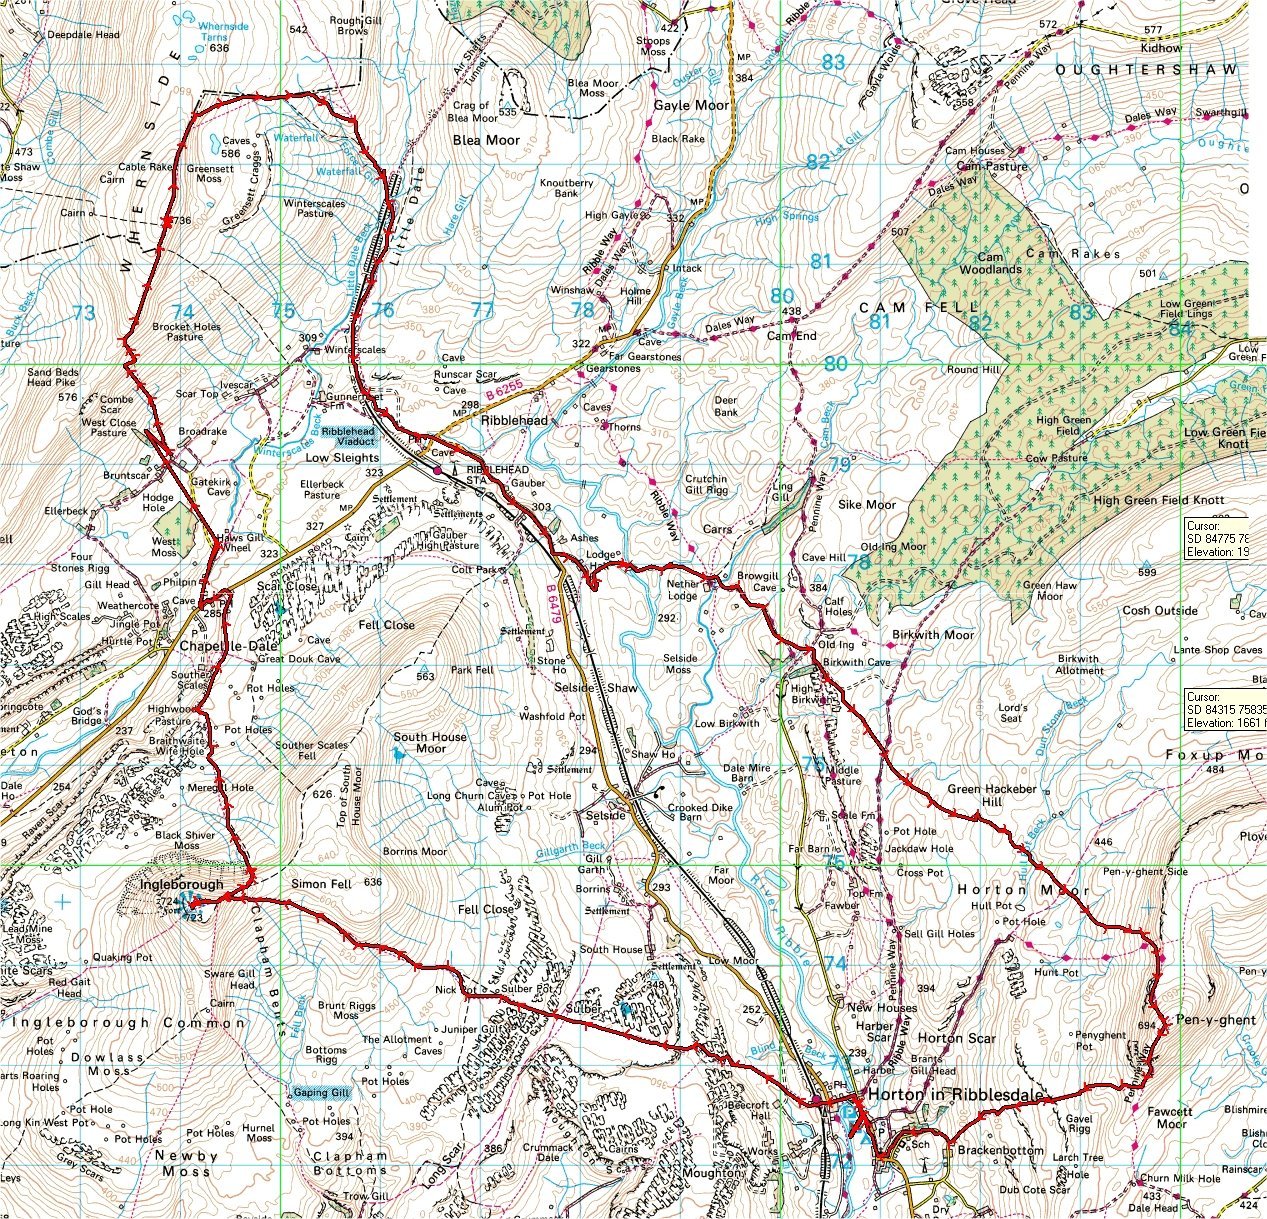 Yorkshire 3 Peaks Os Map - Channa Antonetta